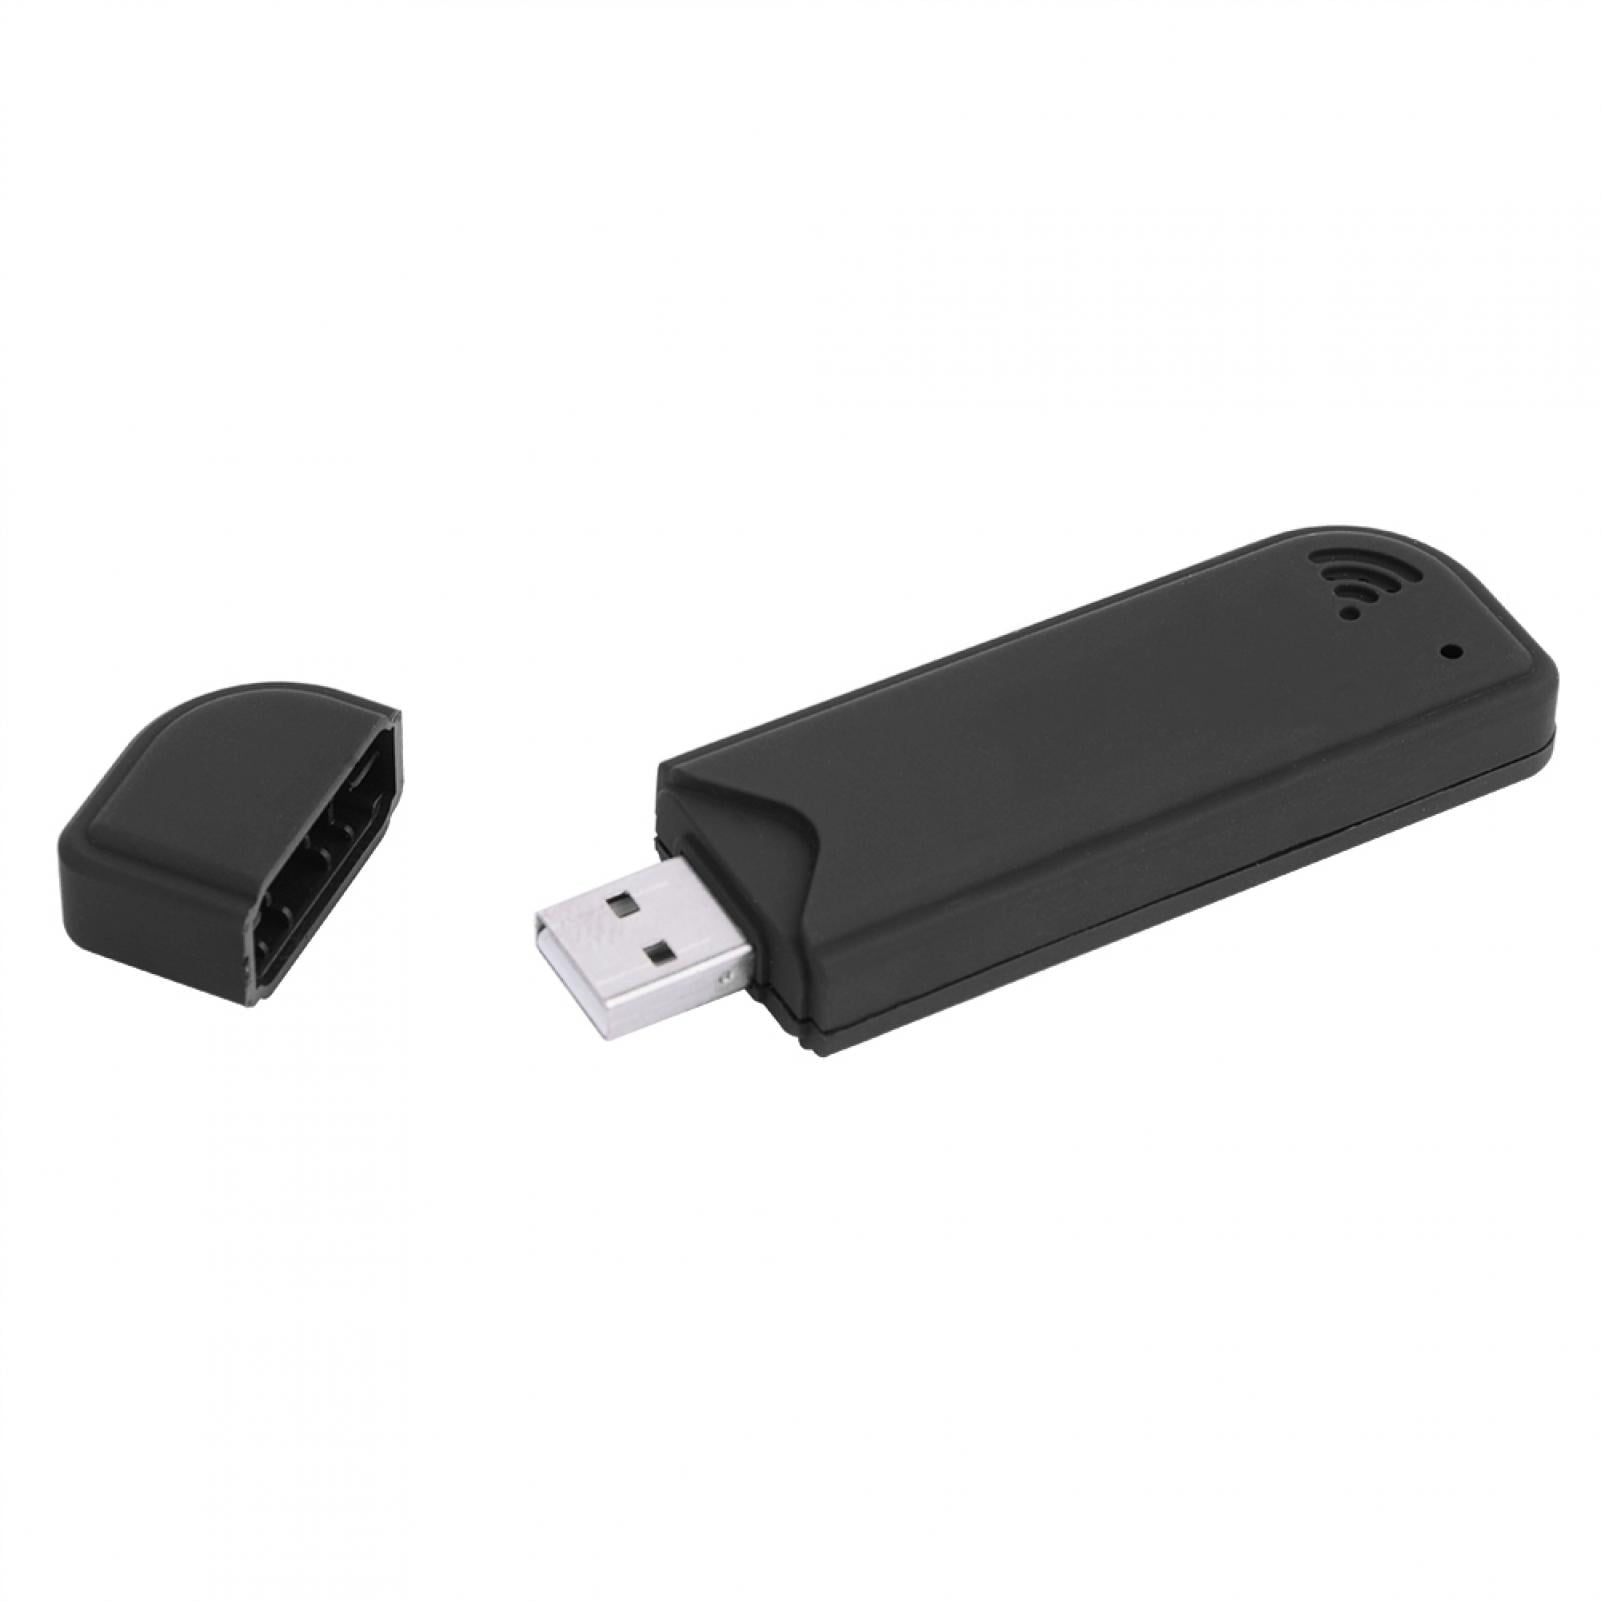 Mini Portable TV Stick Tuner Receiver Video Recorder for Laptop PC ISDB-T Digital USB 2.0 TV Receiver 